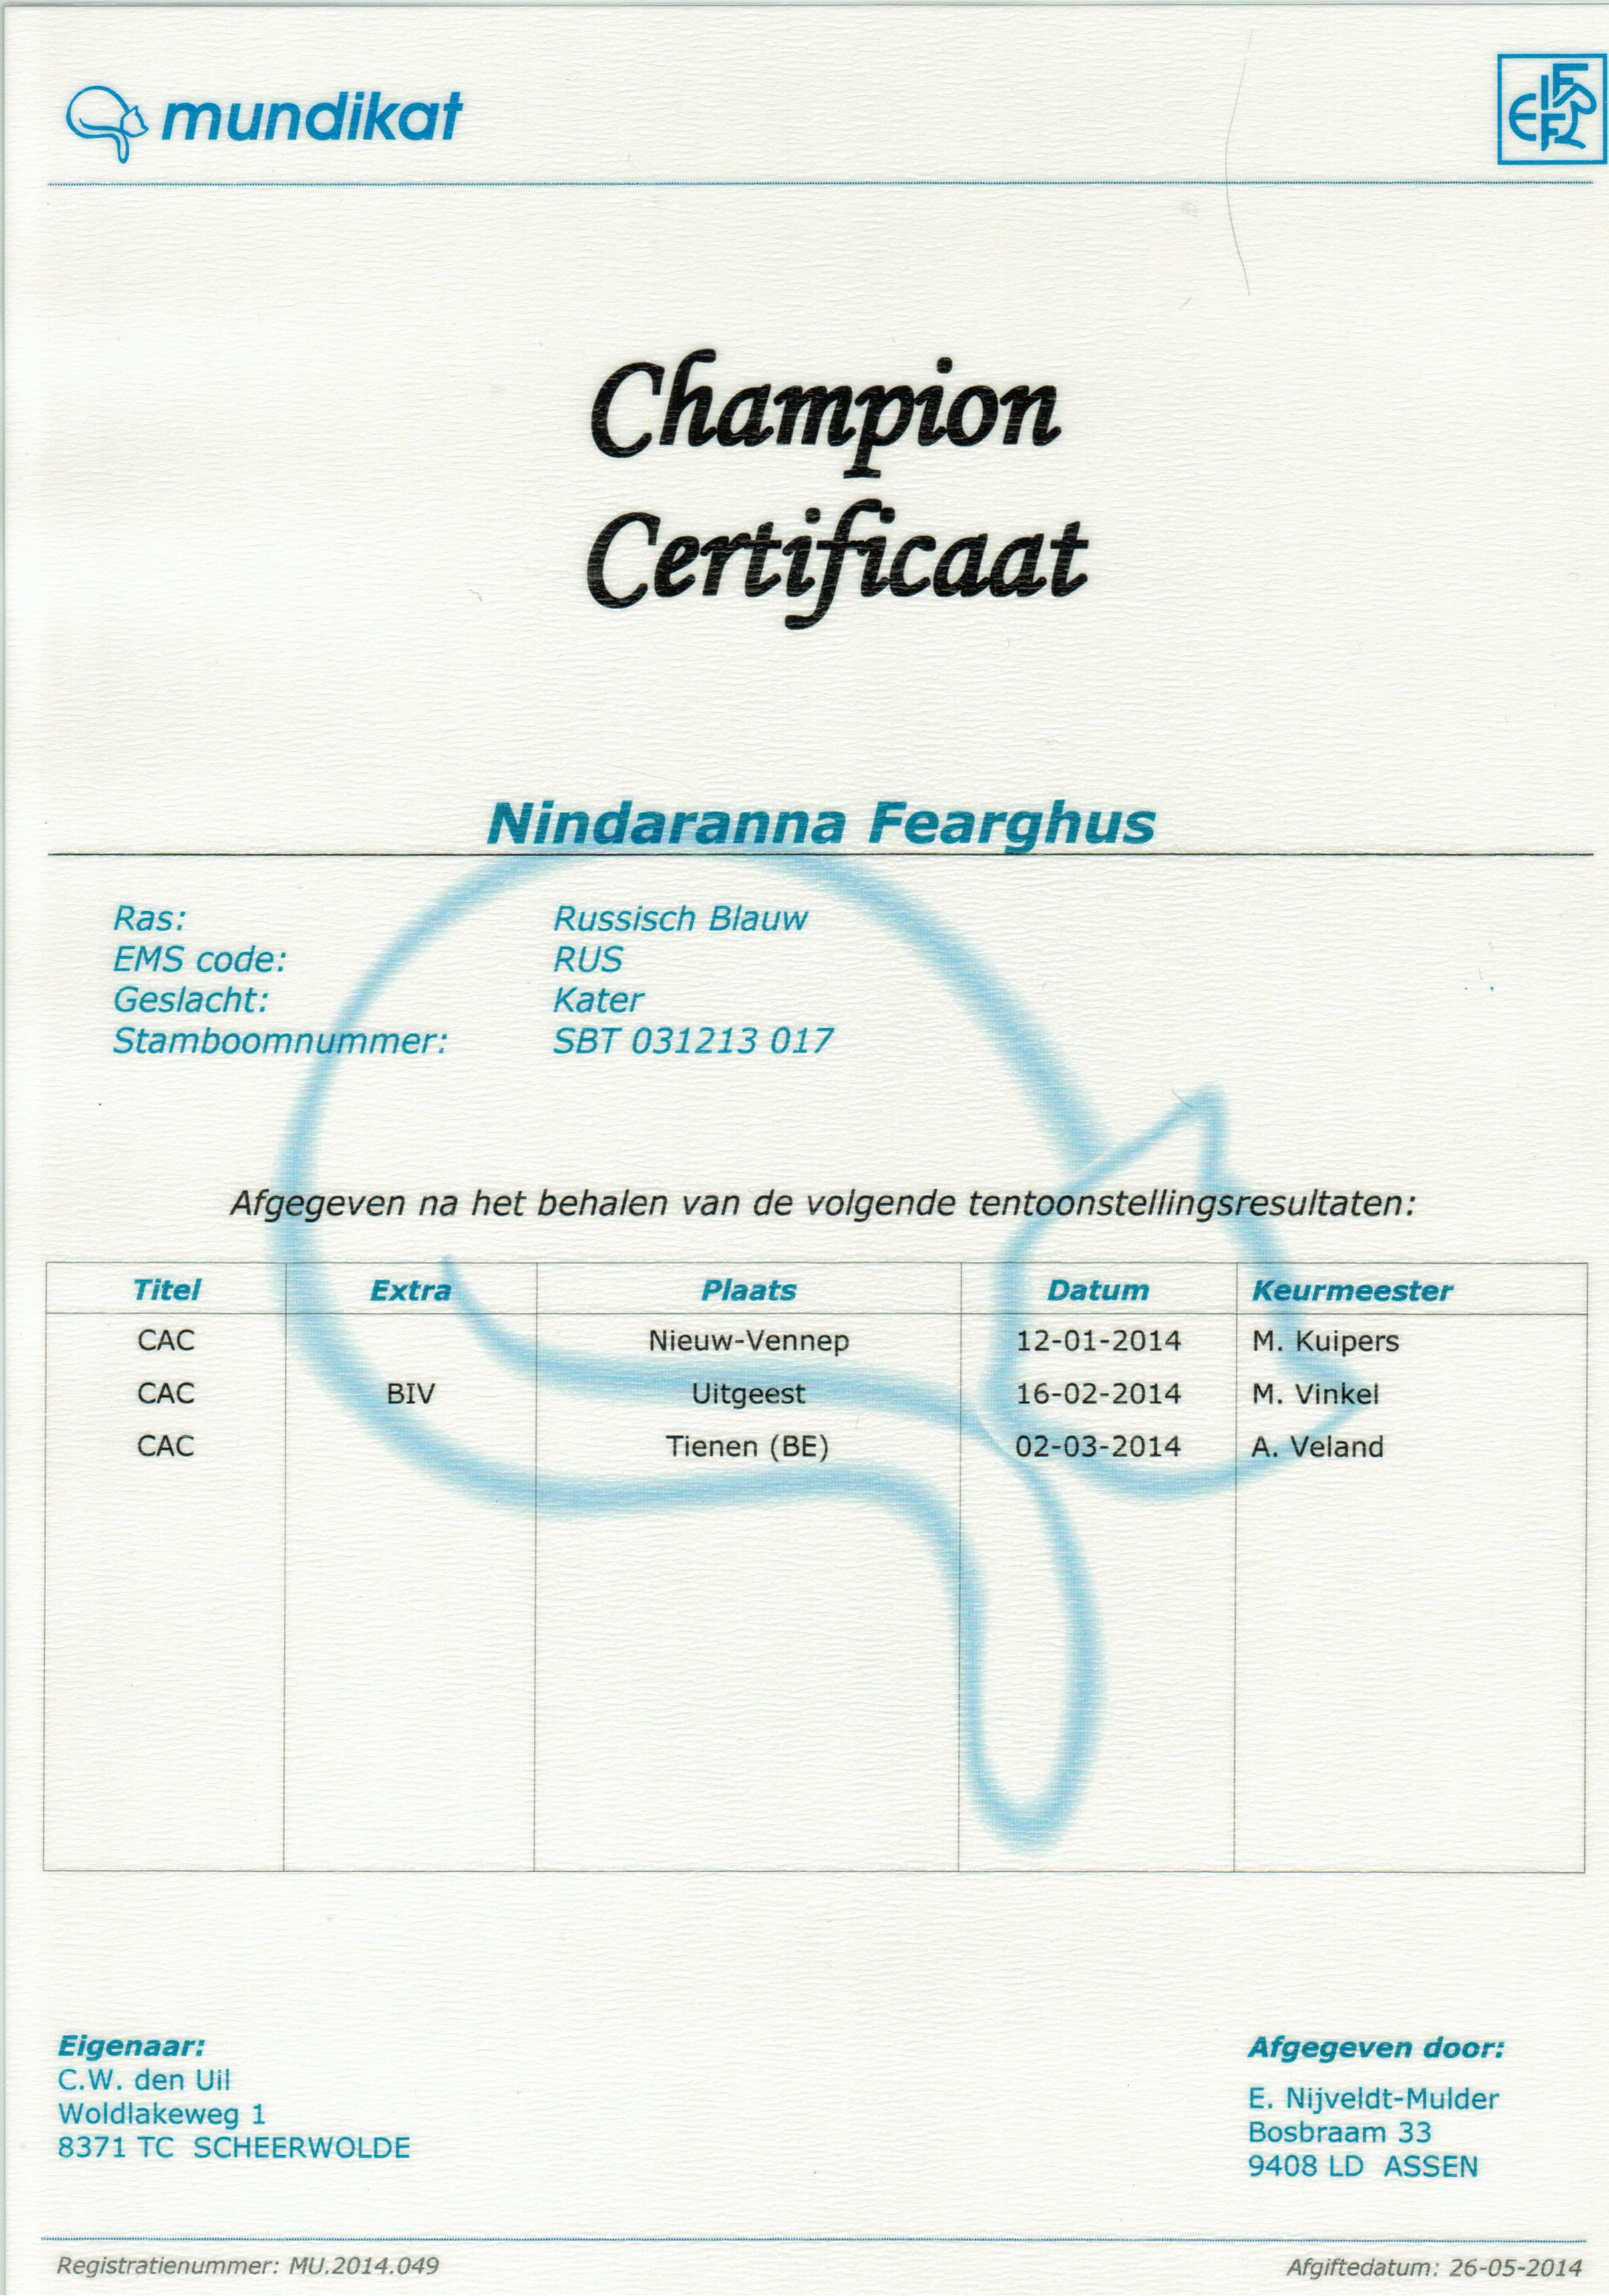 Kampioens certificaat Nindaranna Fearghus